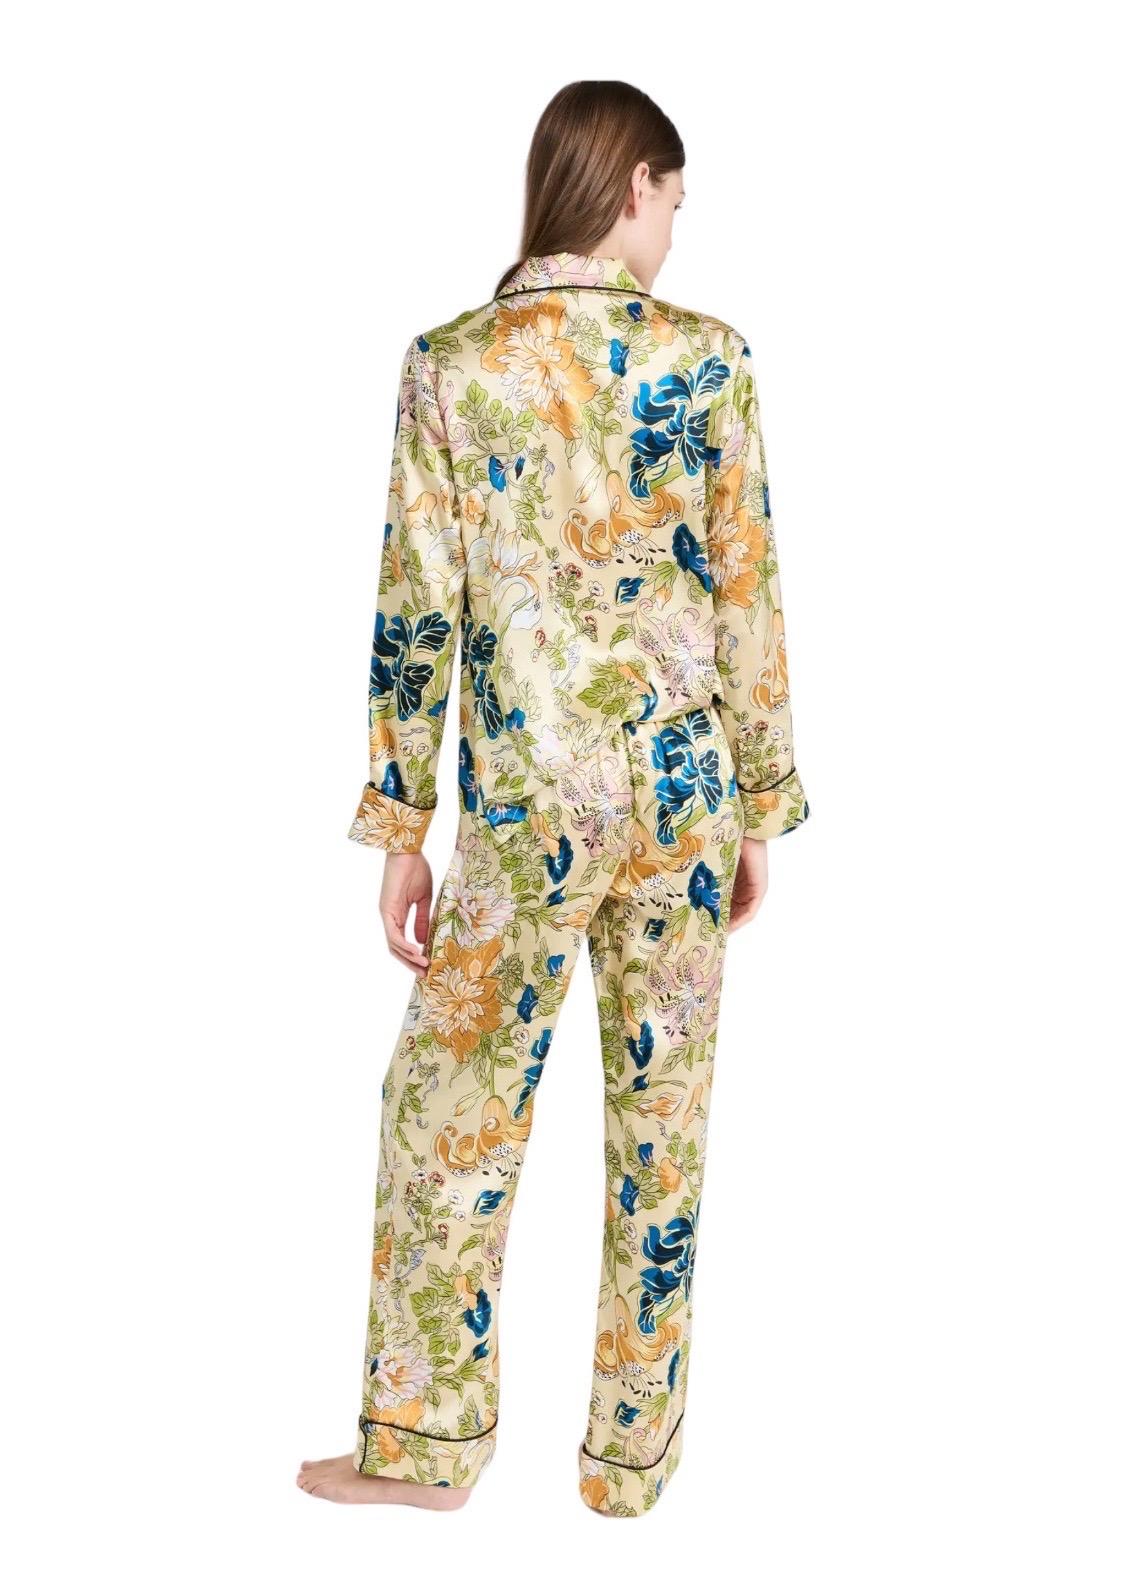 NEW Olivia Von Halle Silk Floral Print Pajamas Lounge Home Sleep Wear Suit M For Sale 1